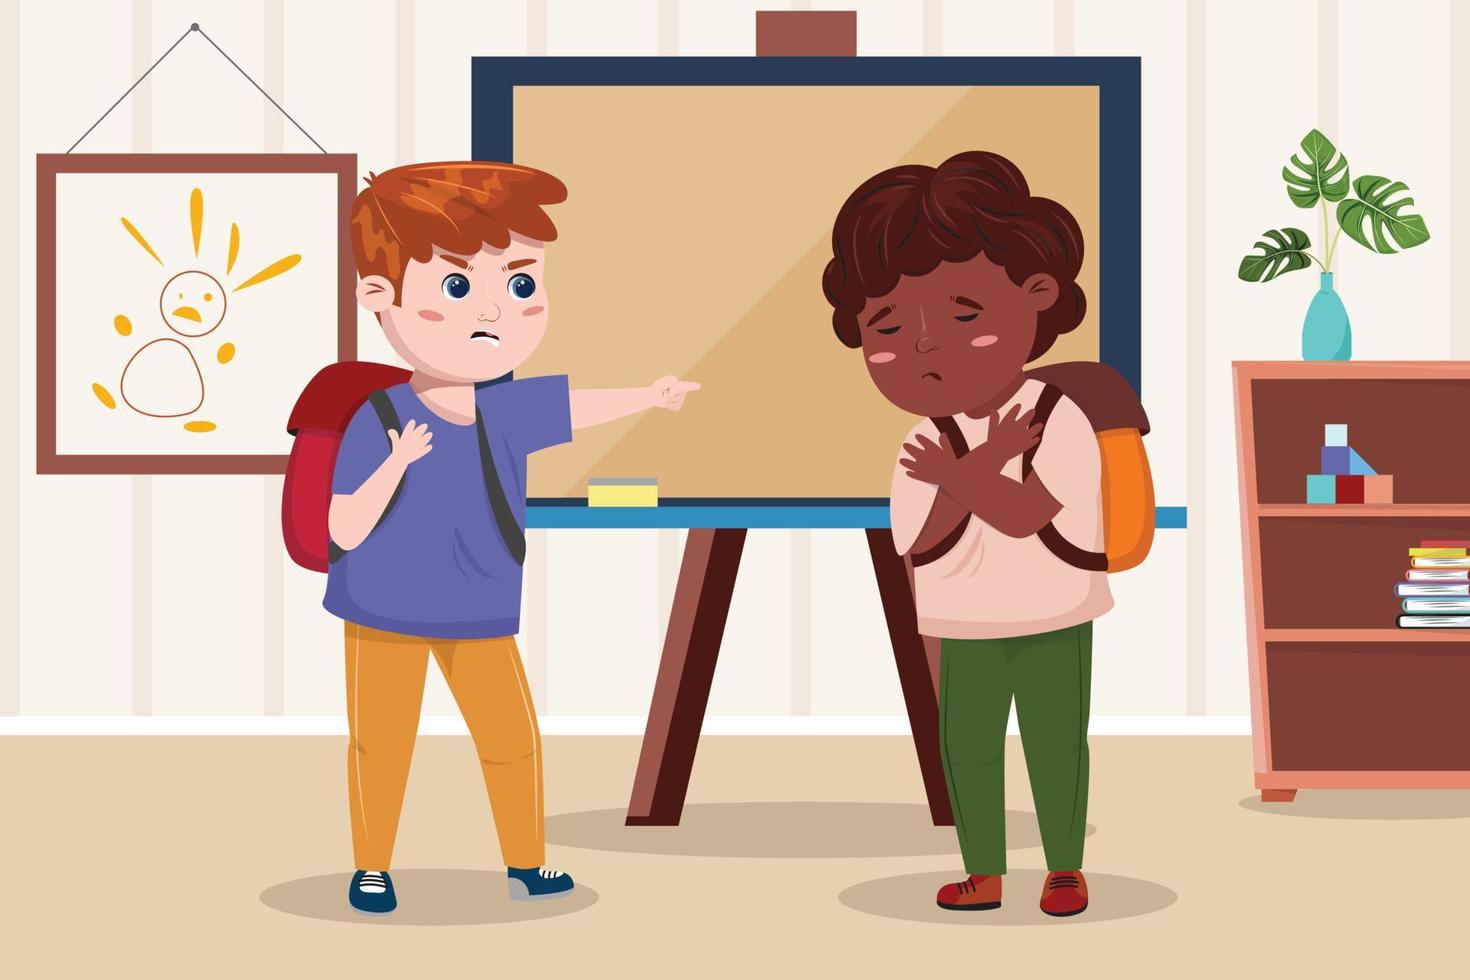 tecknad serie illustration av en med vit pojke anklagar en svart pojke i klassrum bakgrund. rasism, mobbning, aggression, beteende, diskriminering begrepp illustration. vektor